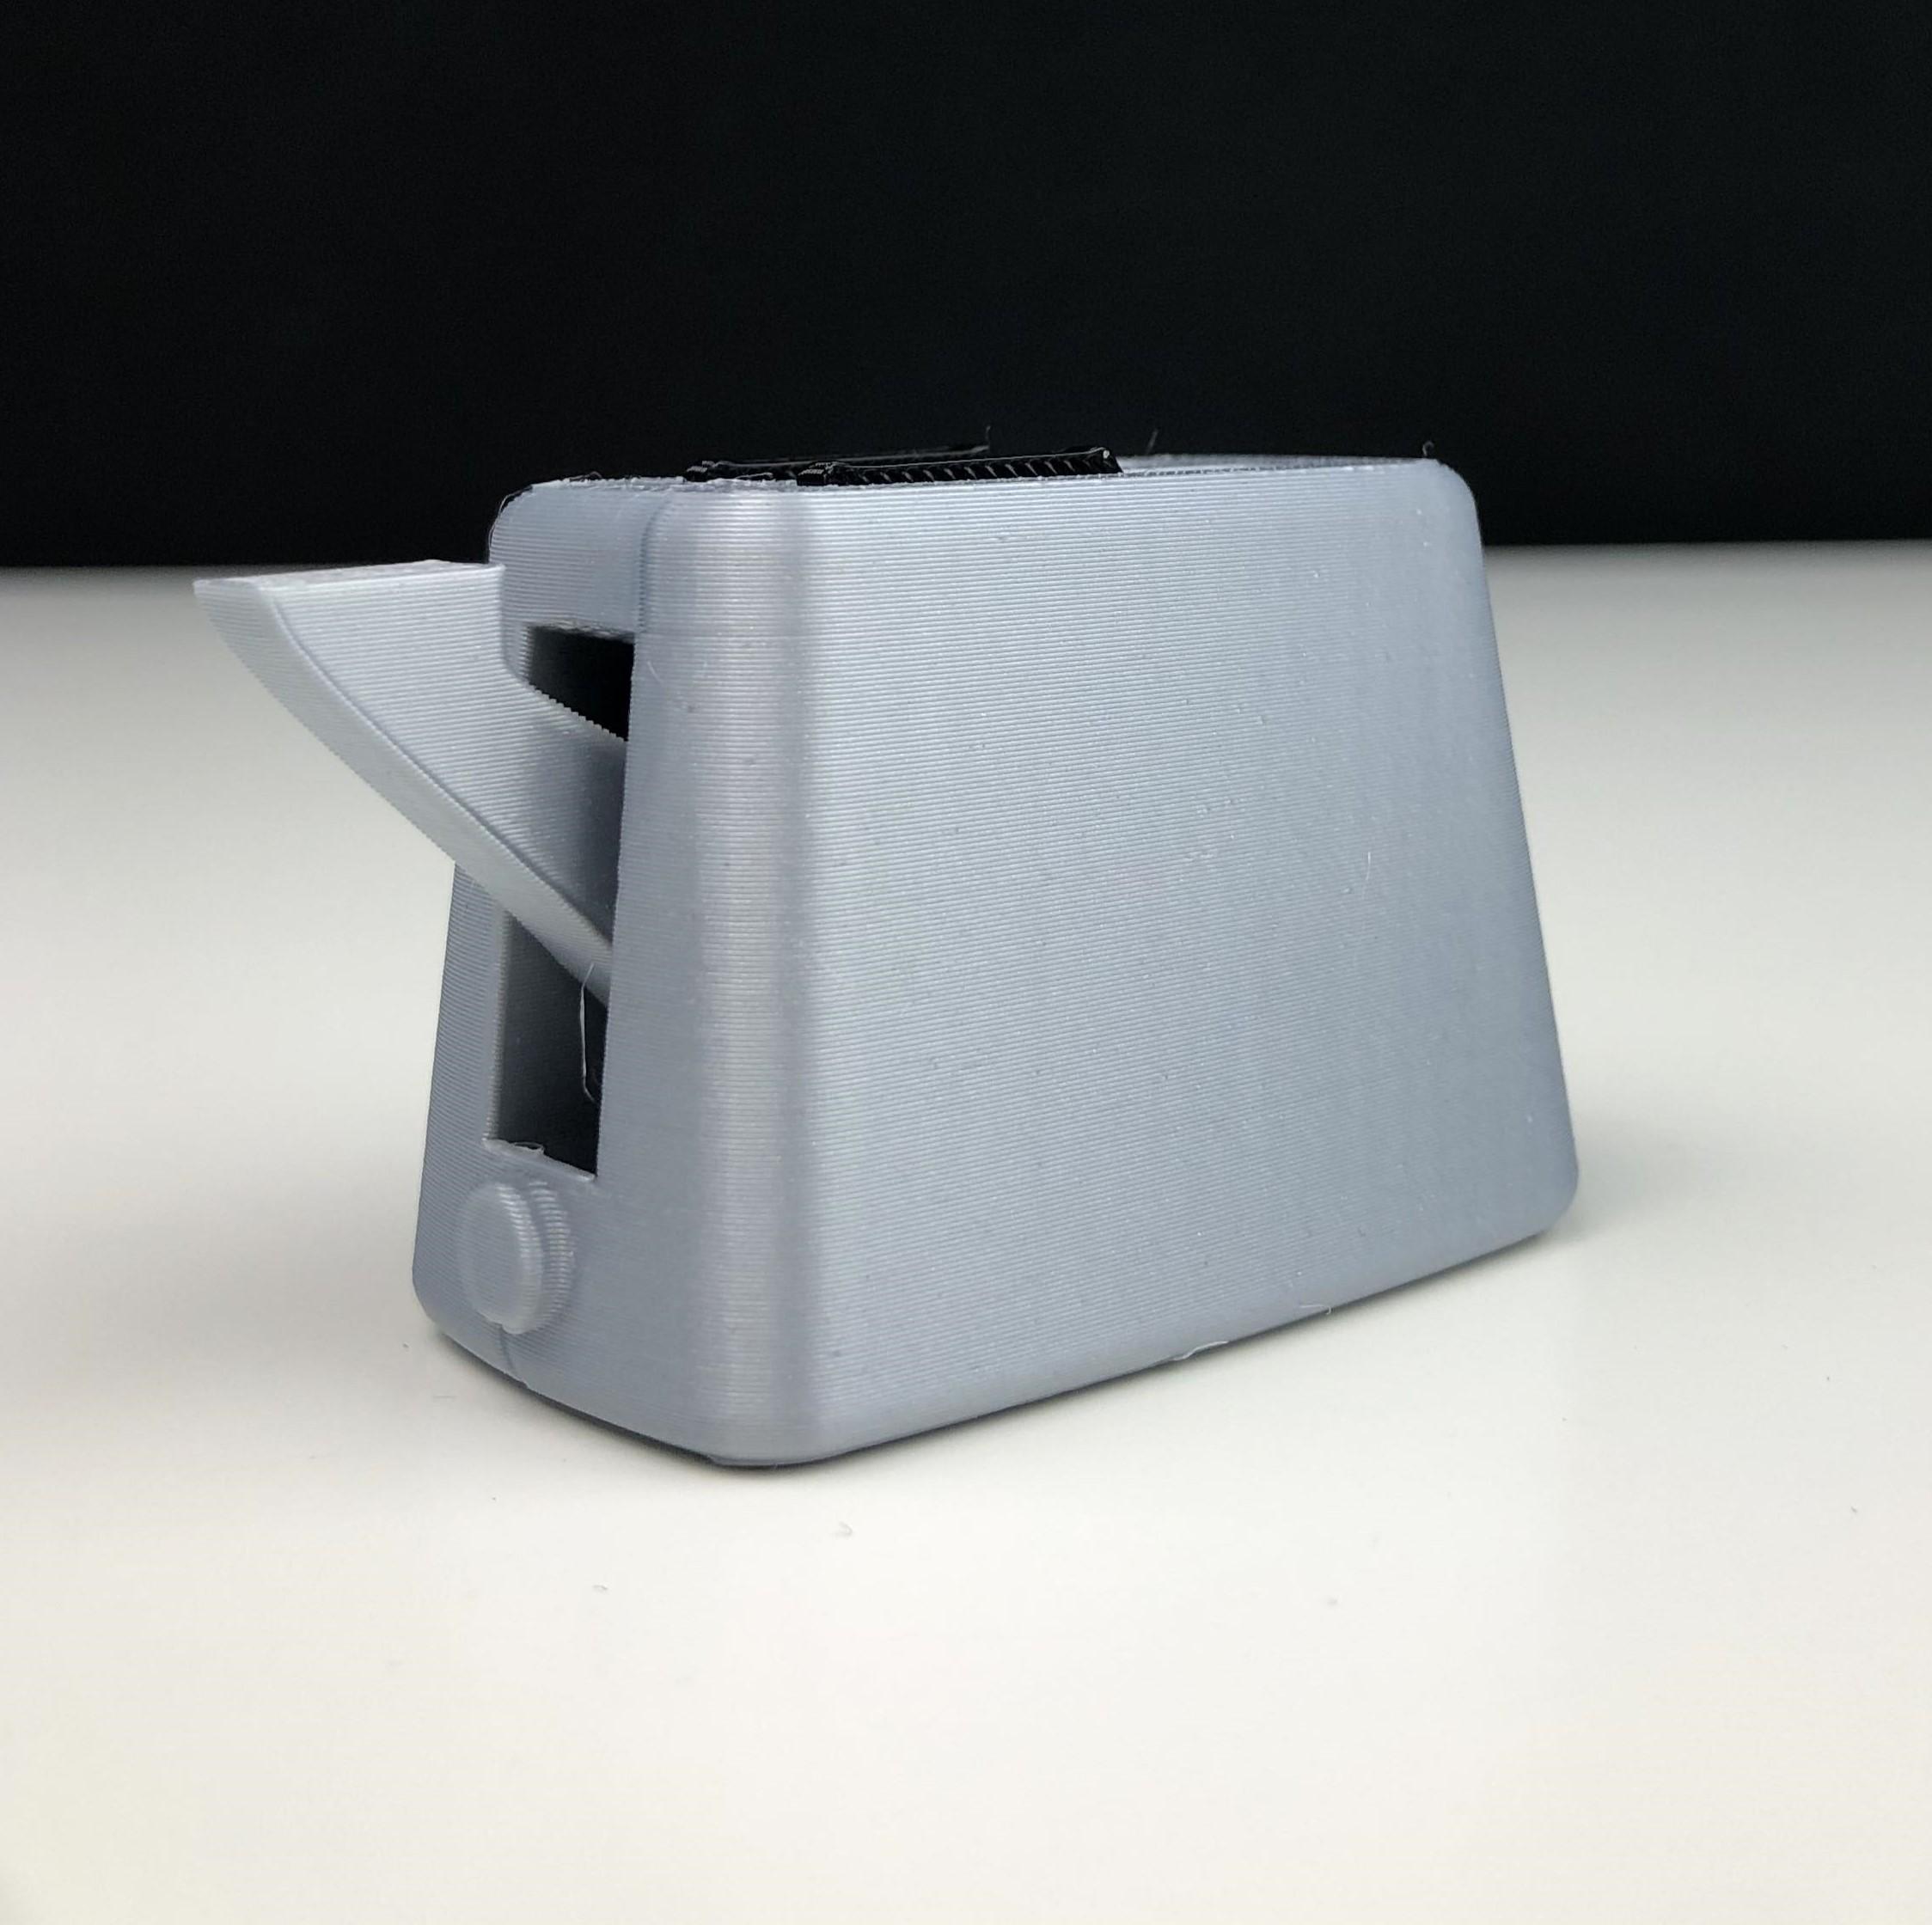 Toaster SD Card Holder (2 Slots) 3d model